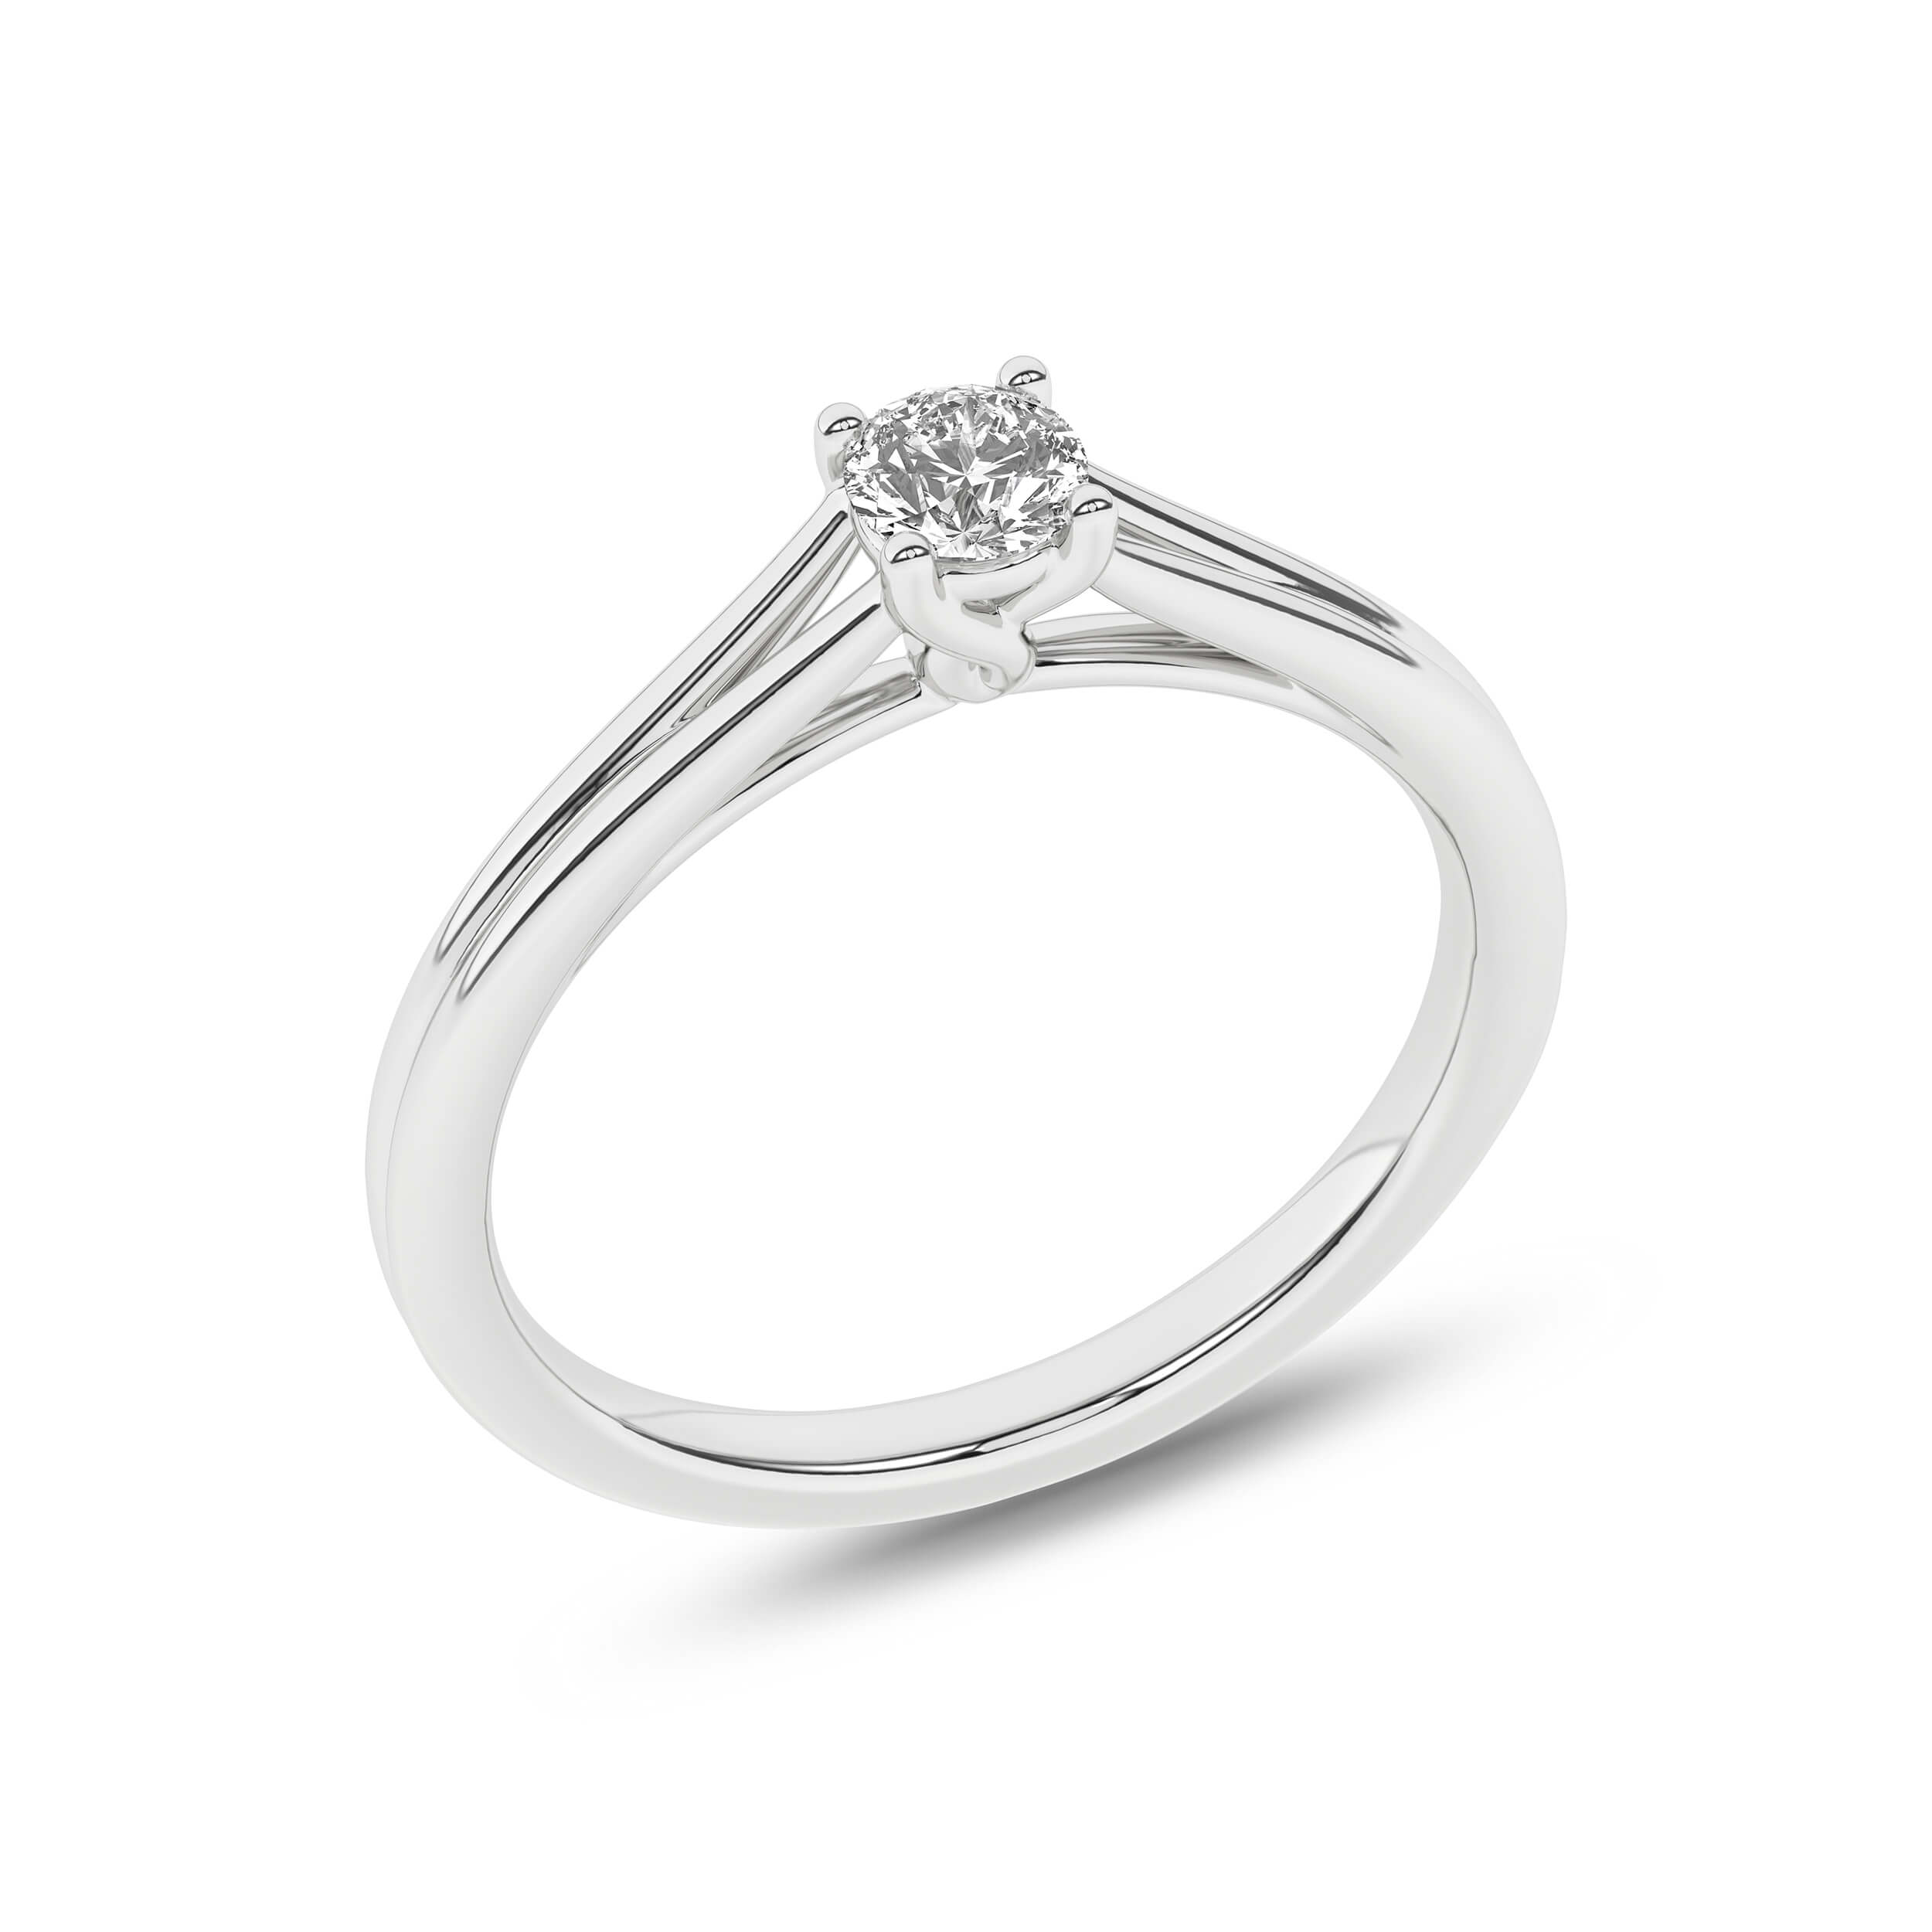 Inel de logodna din Aur Alb 14K cu Diamant 0.25Ct, articol MSD0471EG, previzualizare foto 4